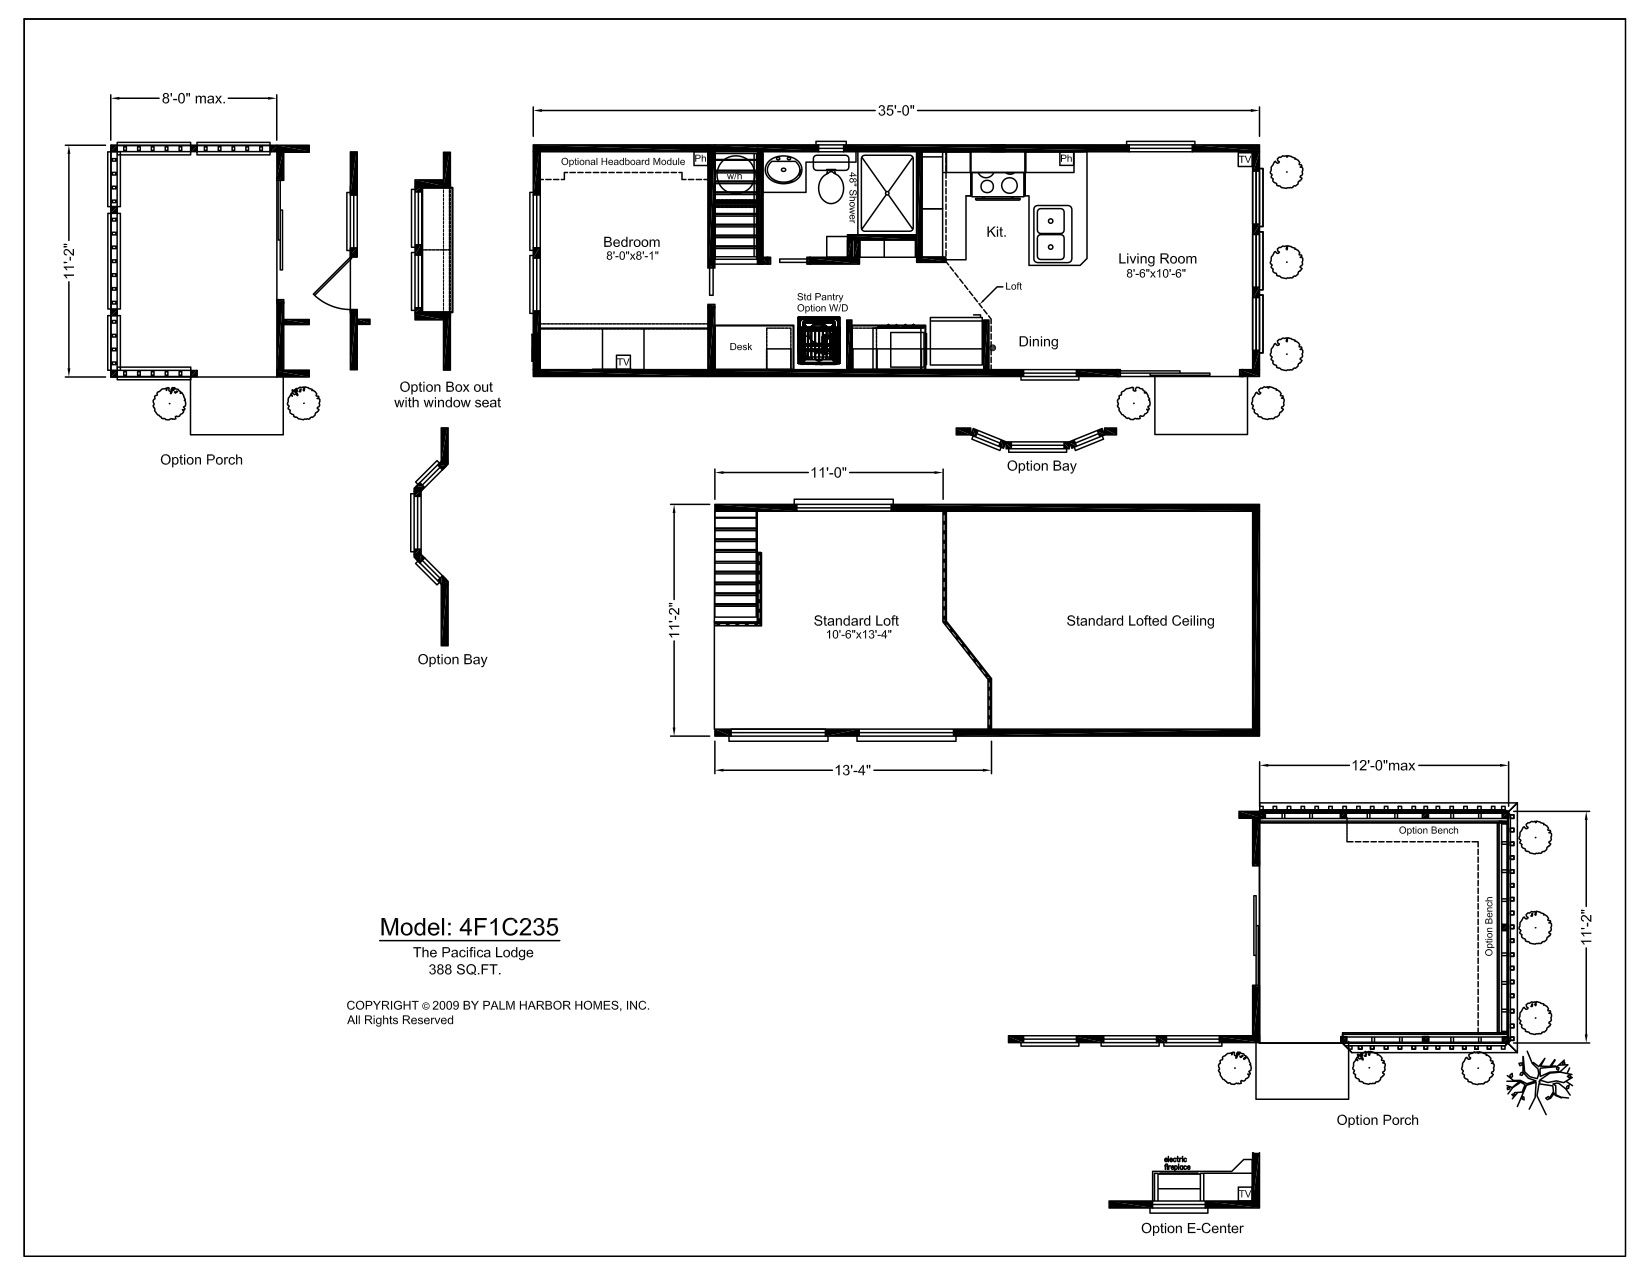 Homes Direct Modular Homes - Model 4F1C235 - Floorplan